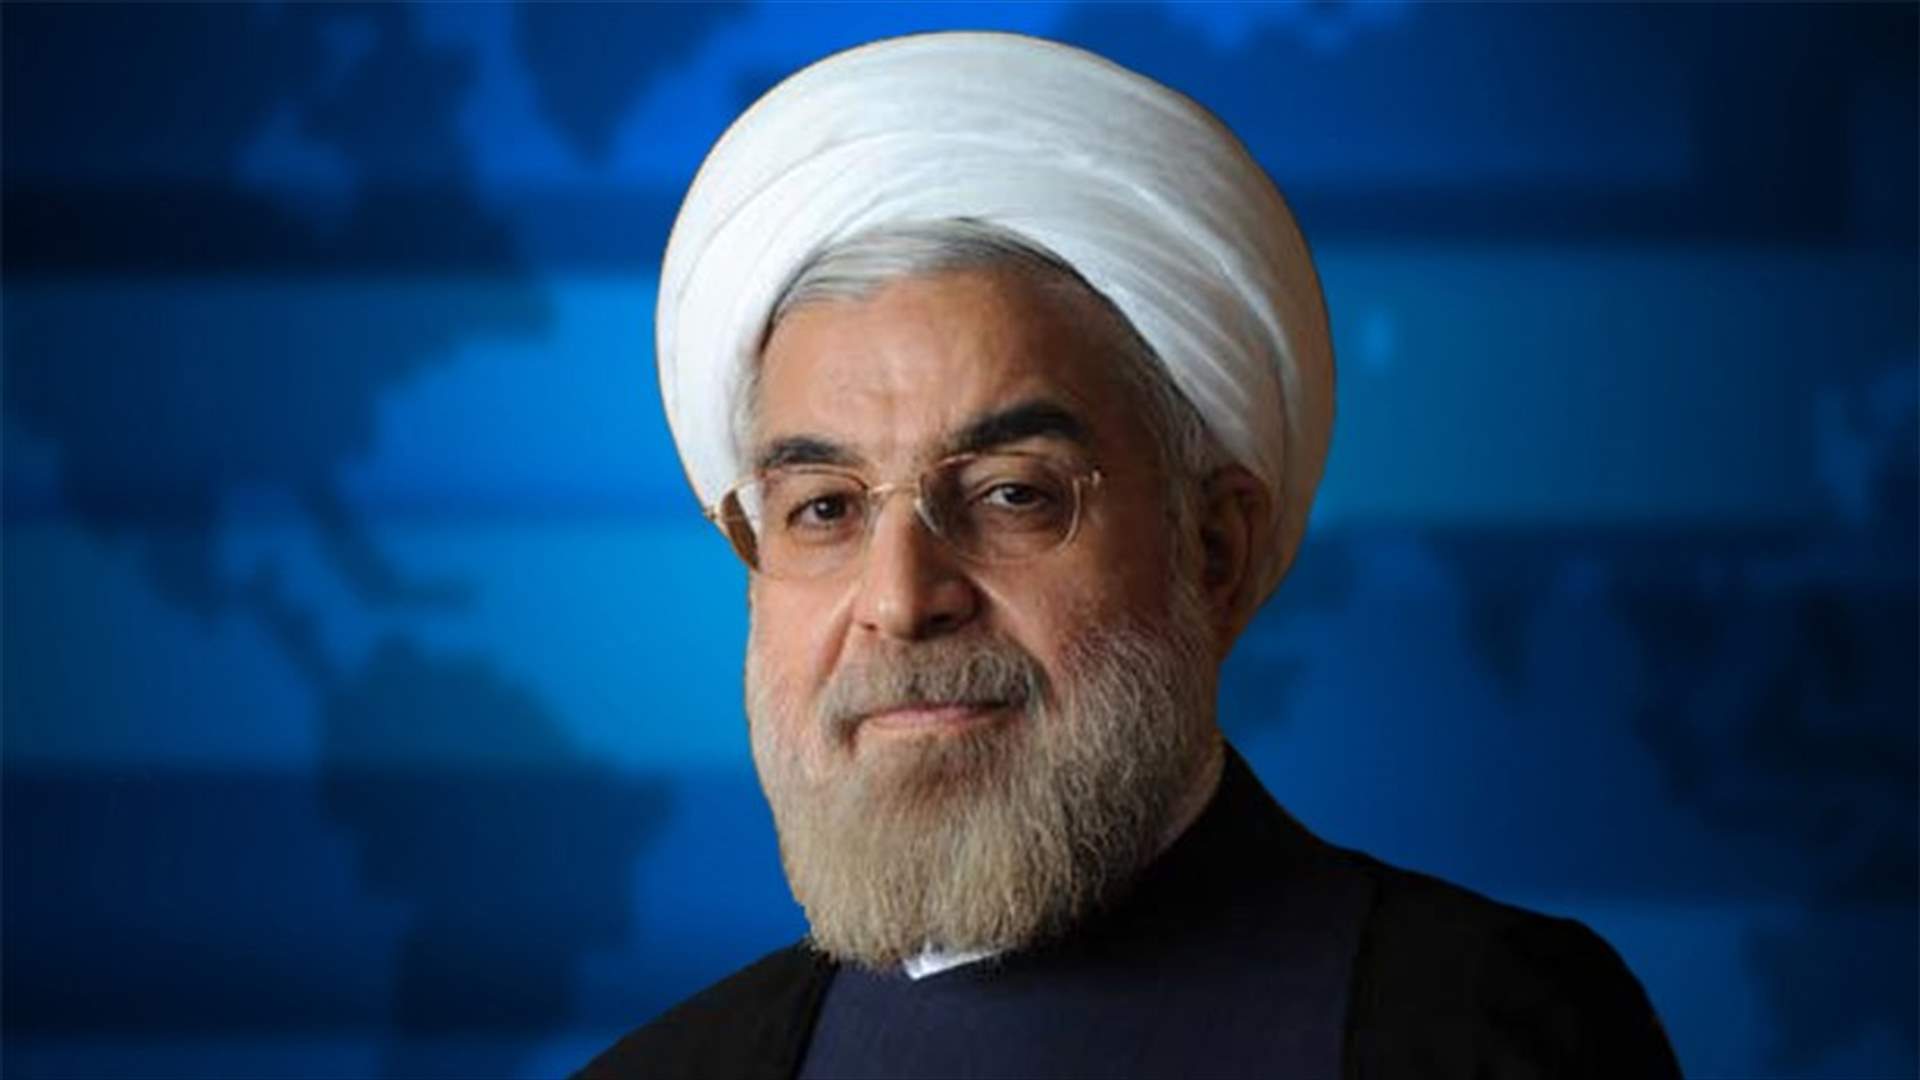 Iran president says wants good ties with Gulf ahead of regional trip